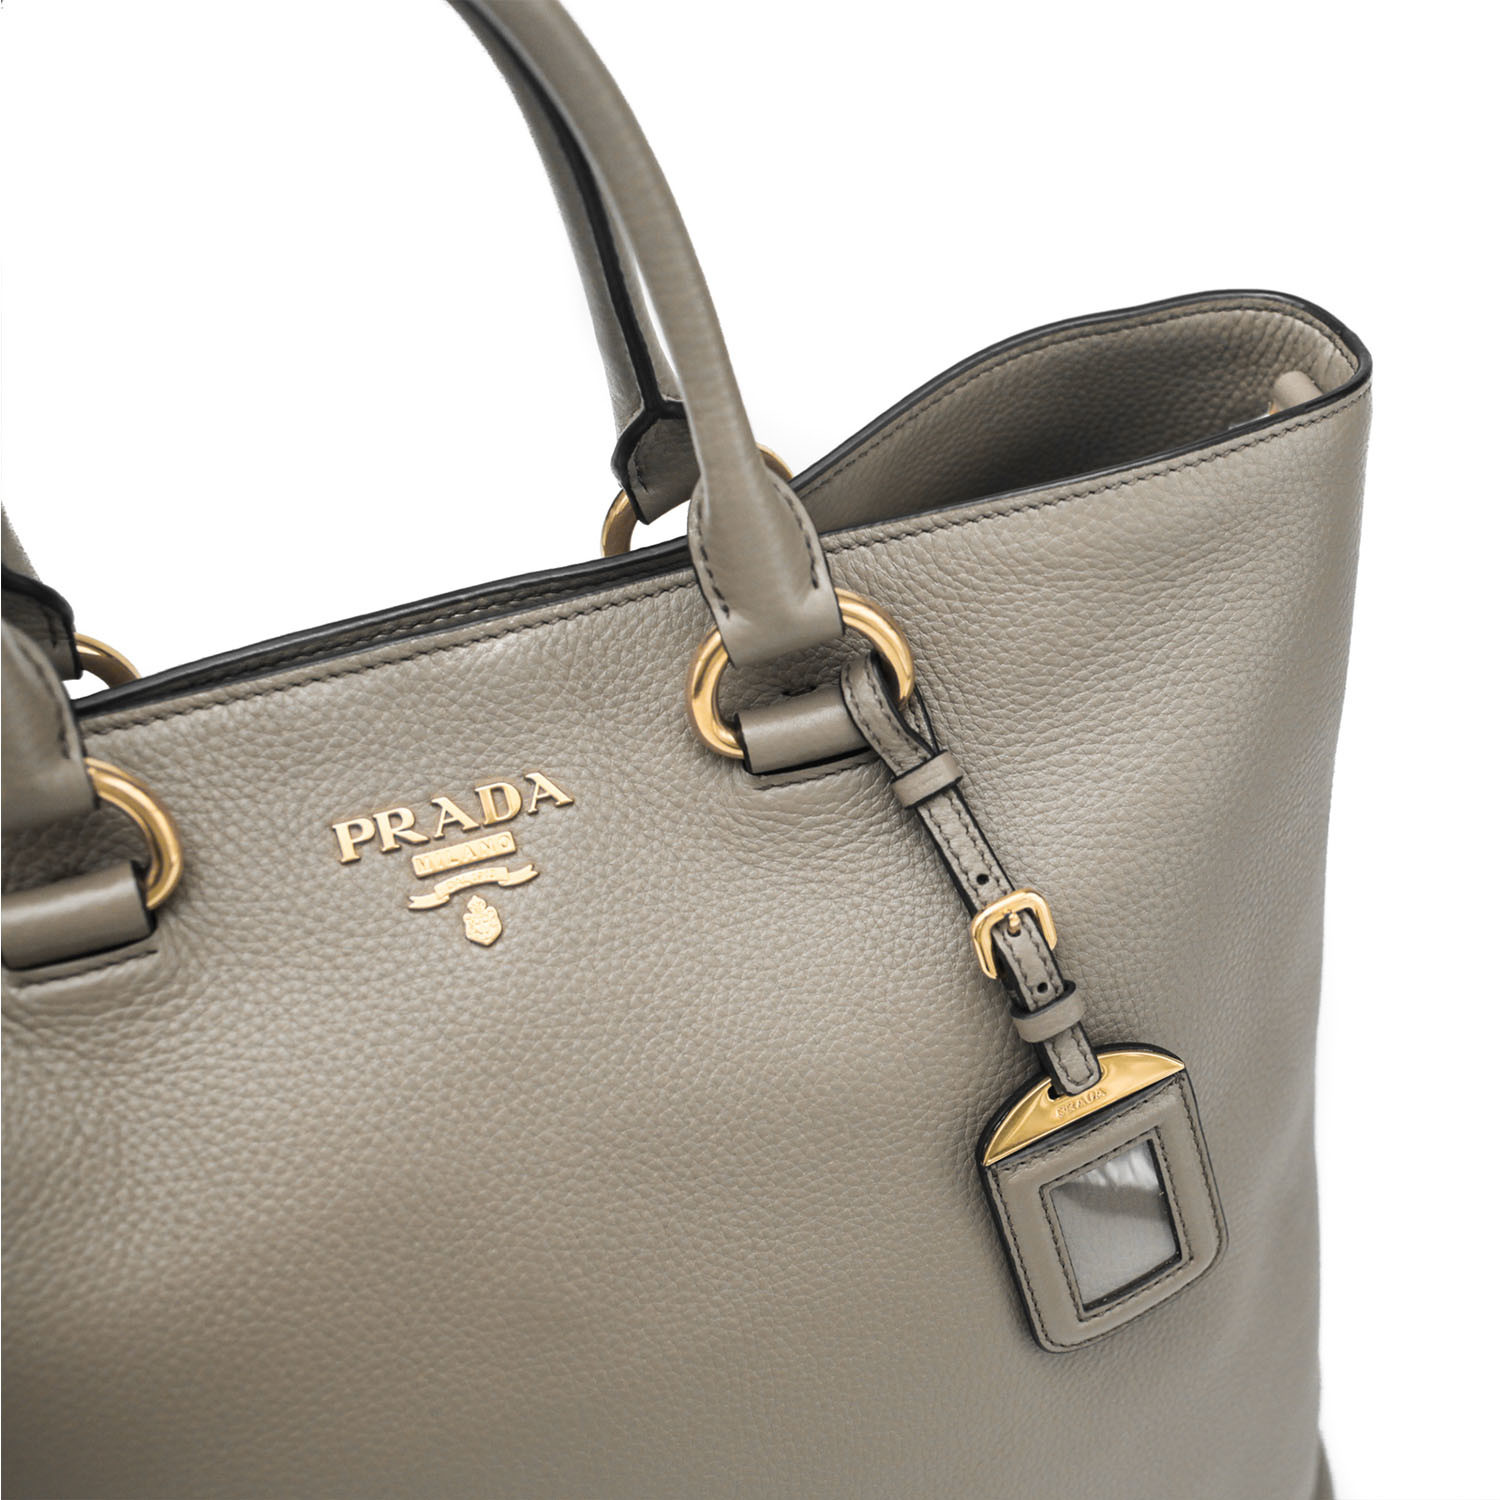 Prada // Vitello Phenix Leather Large Tote Handbag // Gray - The